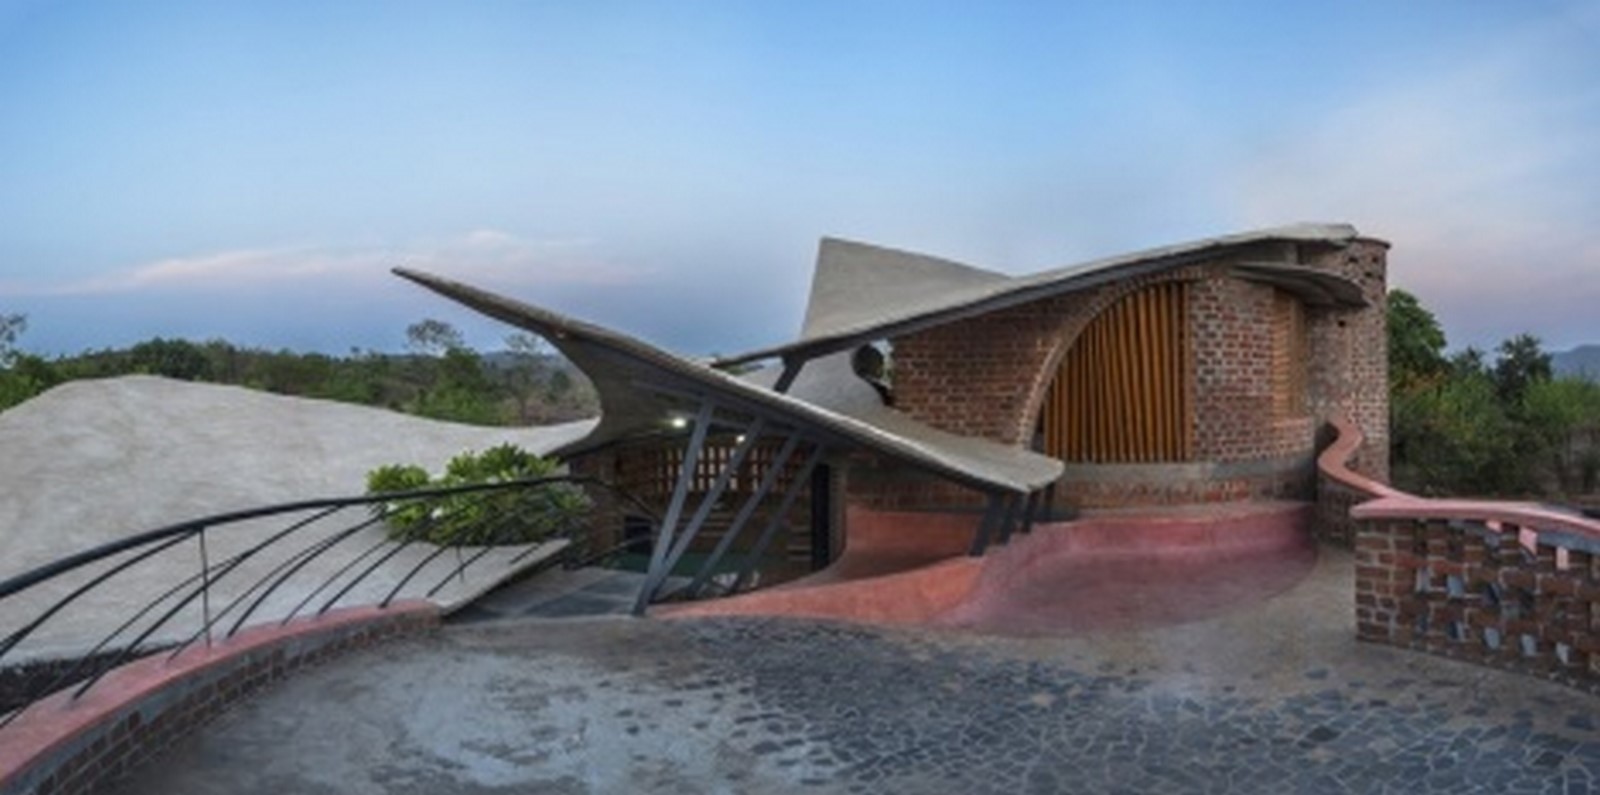 6 Architects inspired by Nari Gandhi - Sheet7